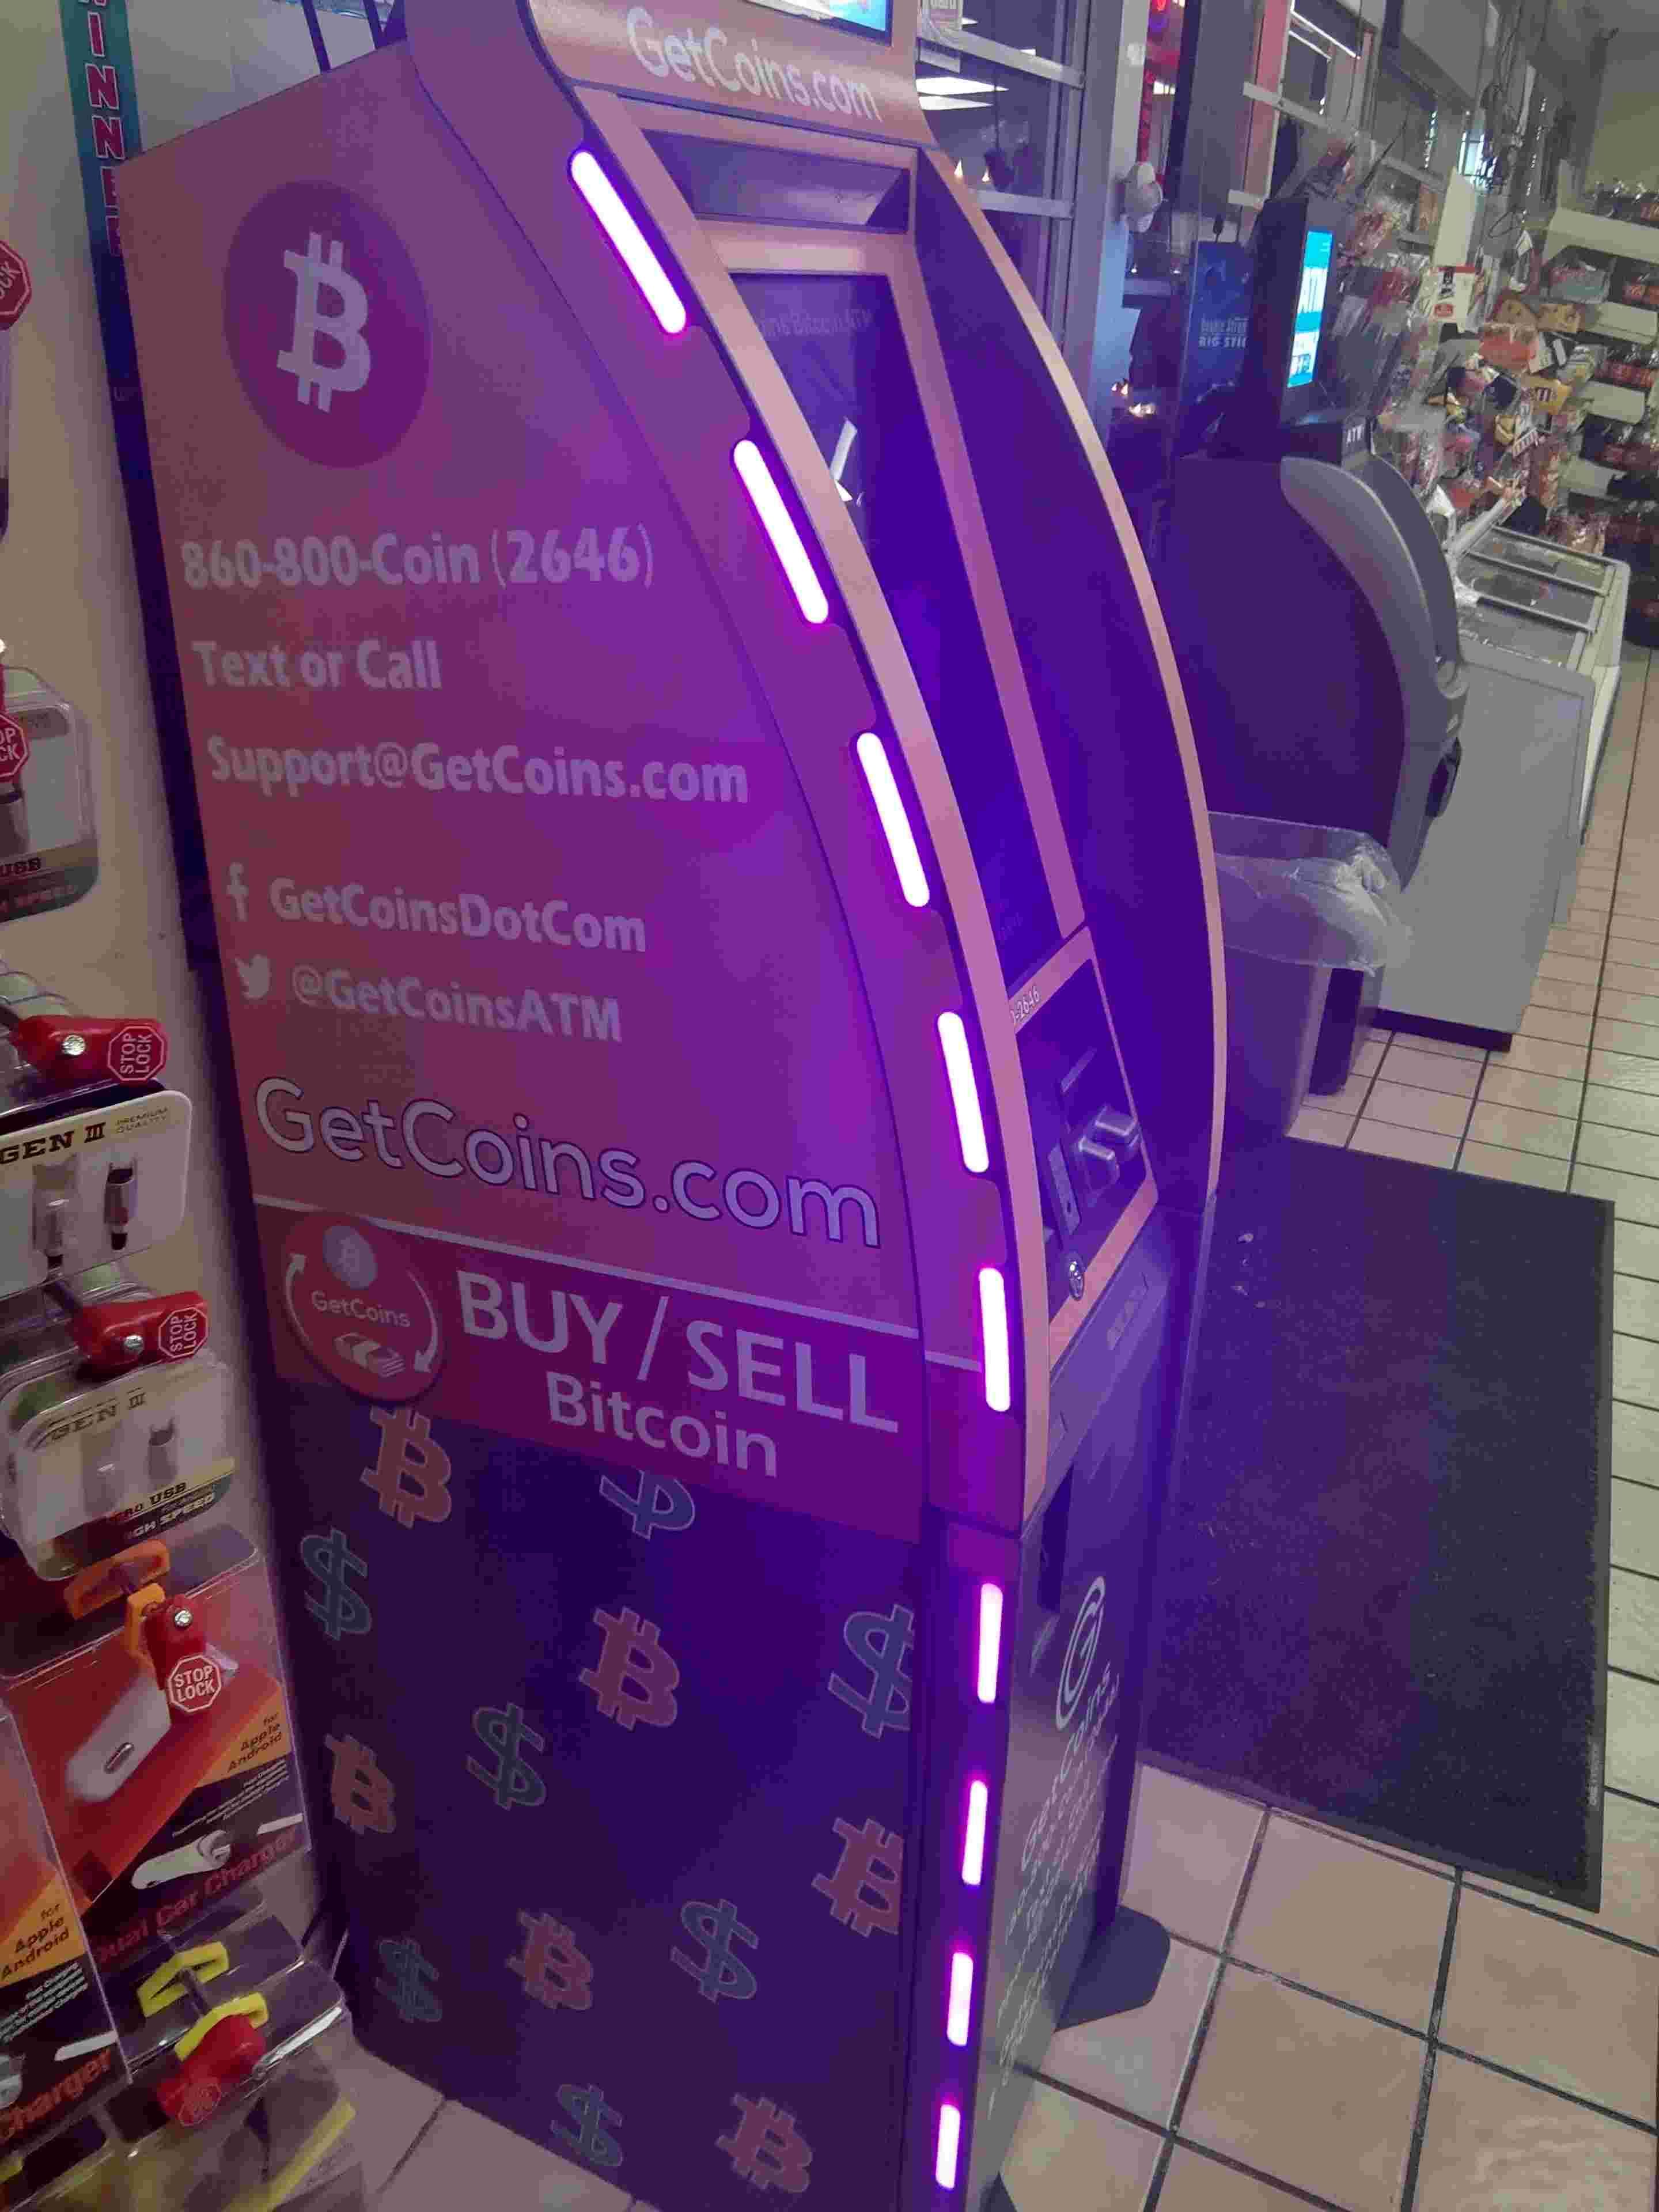 Getcoins - Bitcoin ATM - Inside of Phillips66/Fastlane Foods in Kokomo, Indiana